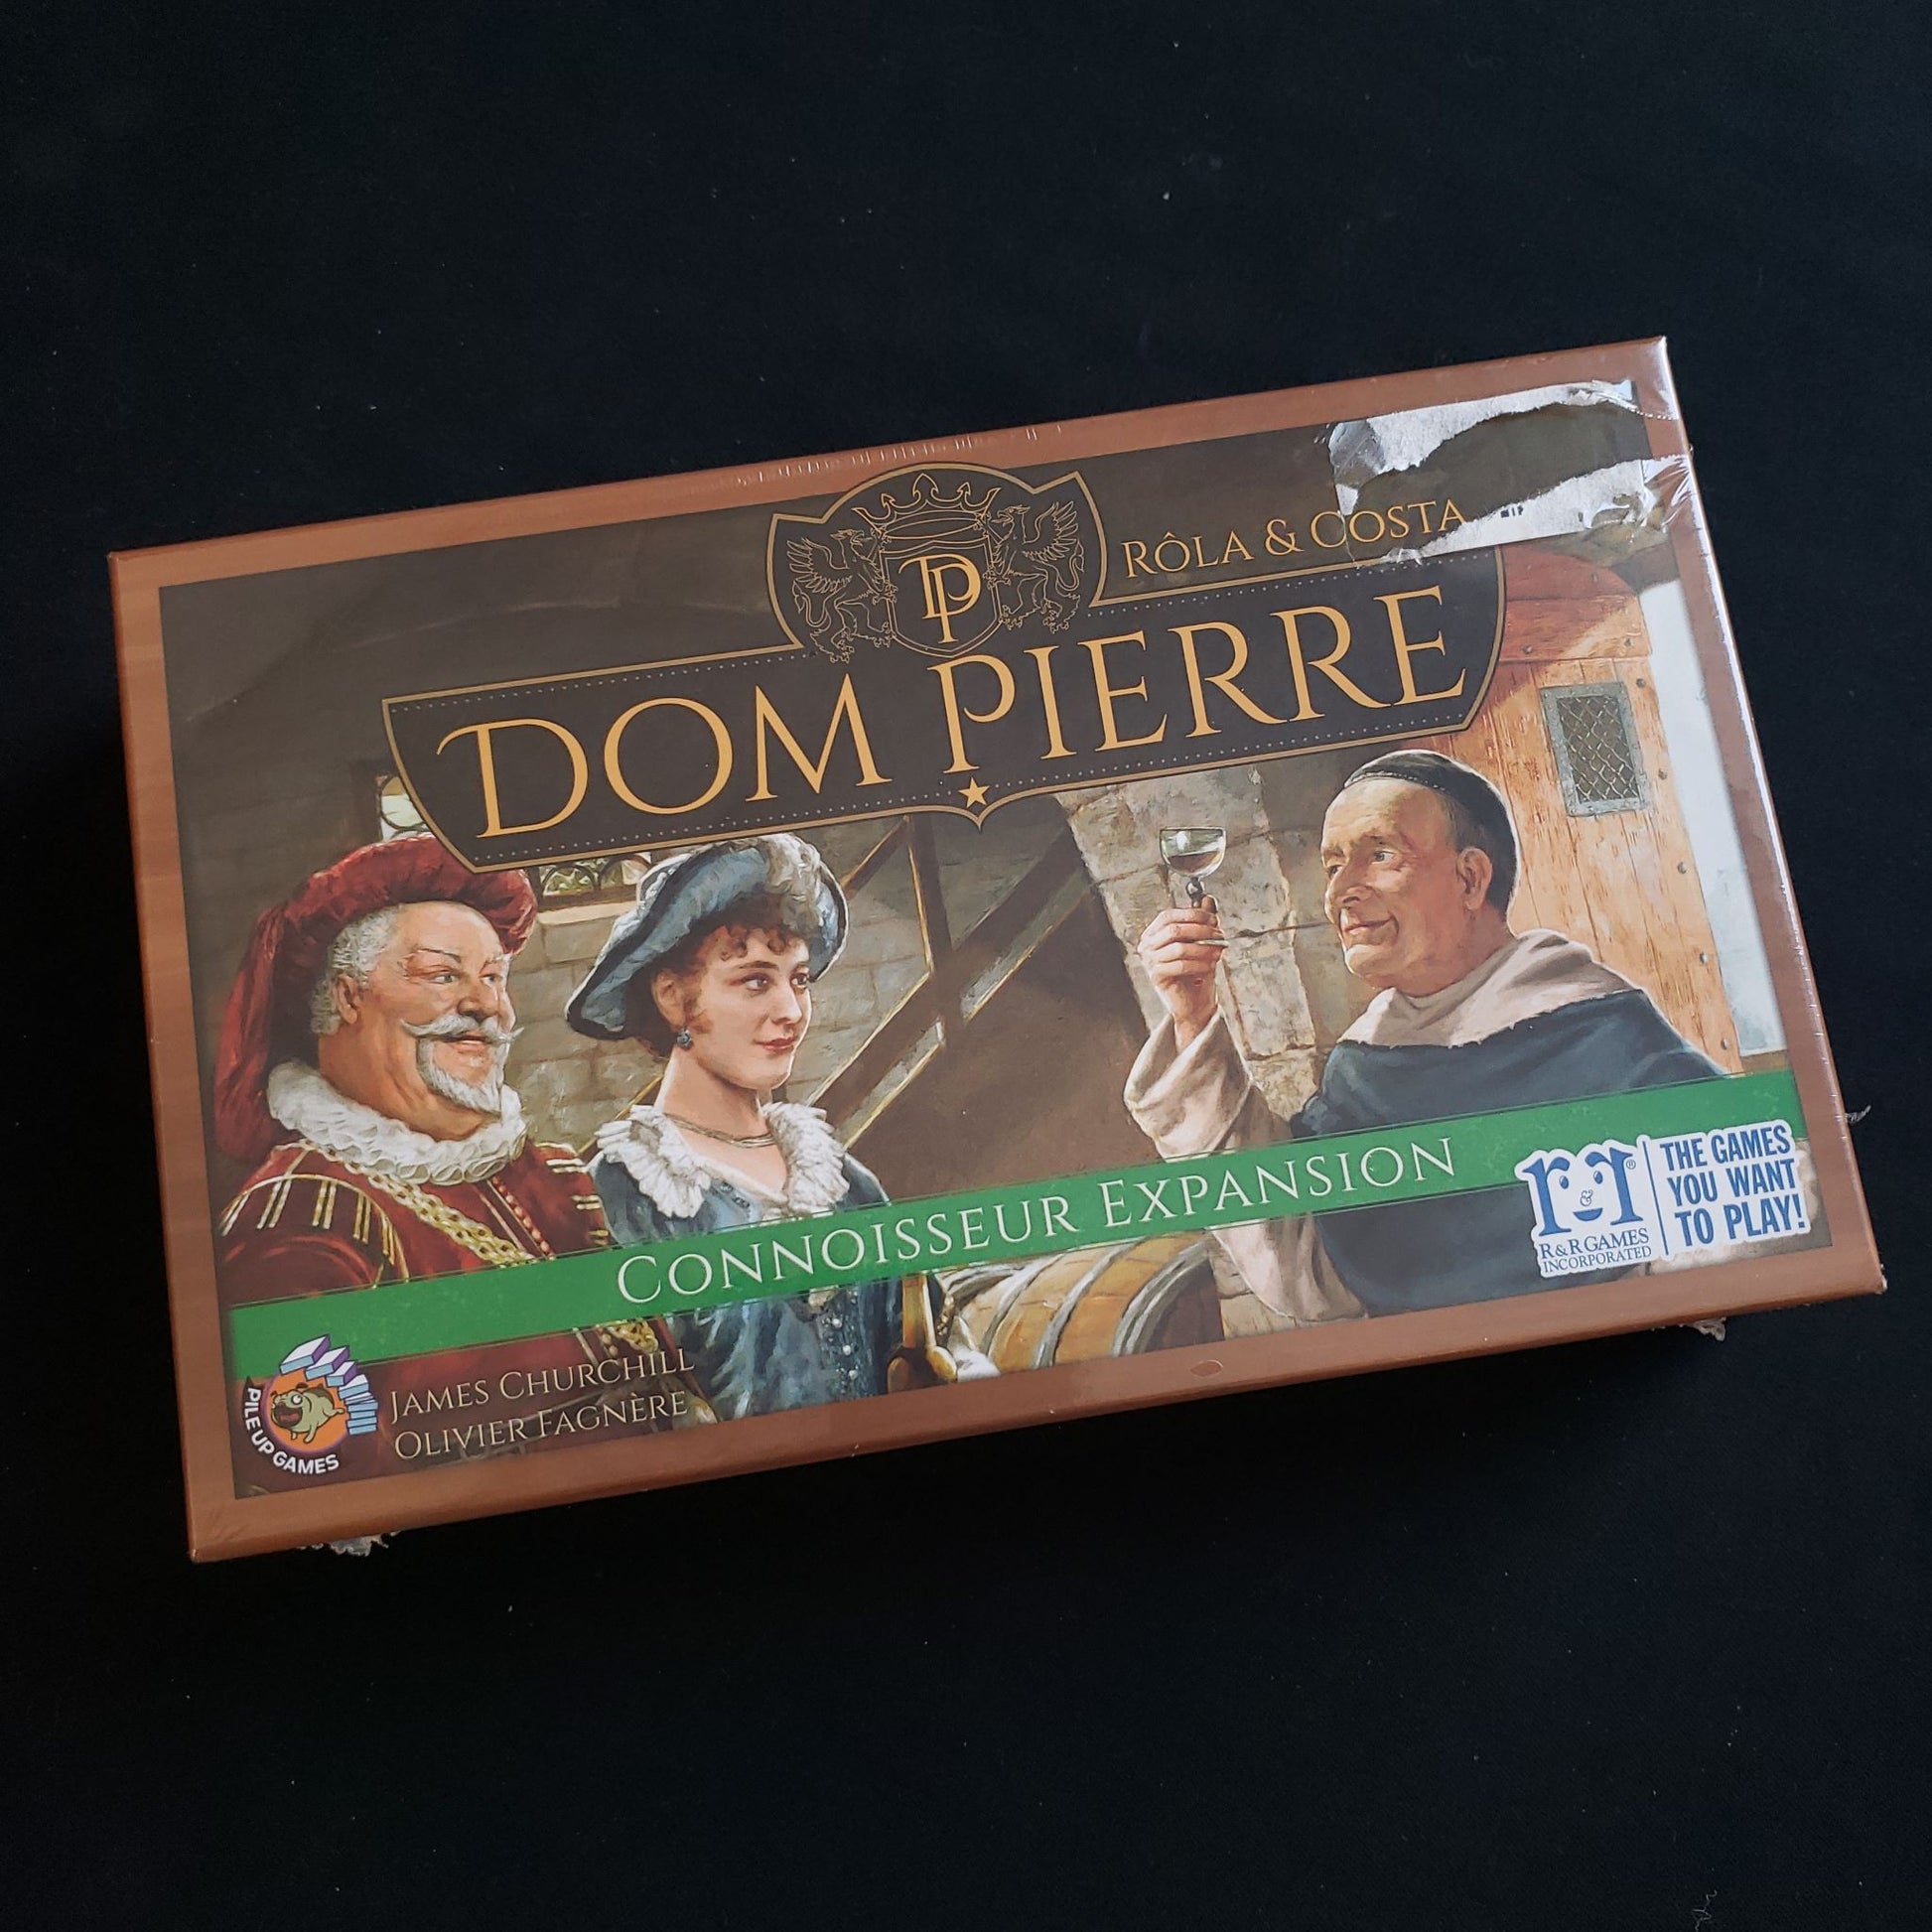 Dom Piere Connoisseur expansion - front cover of box